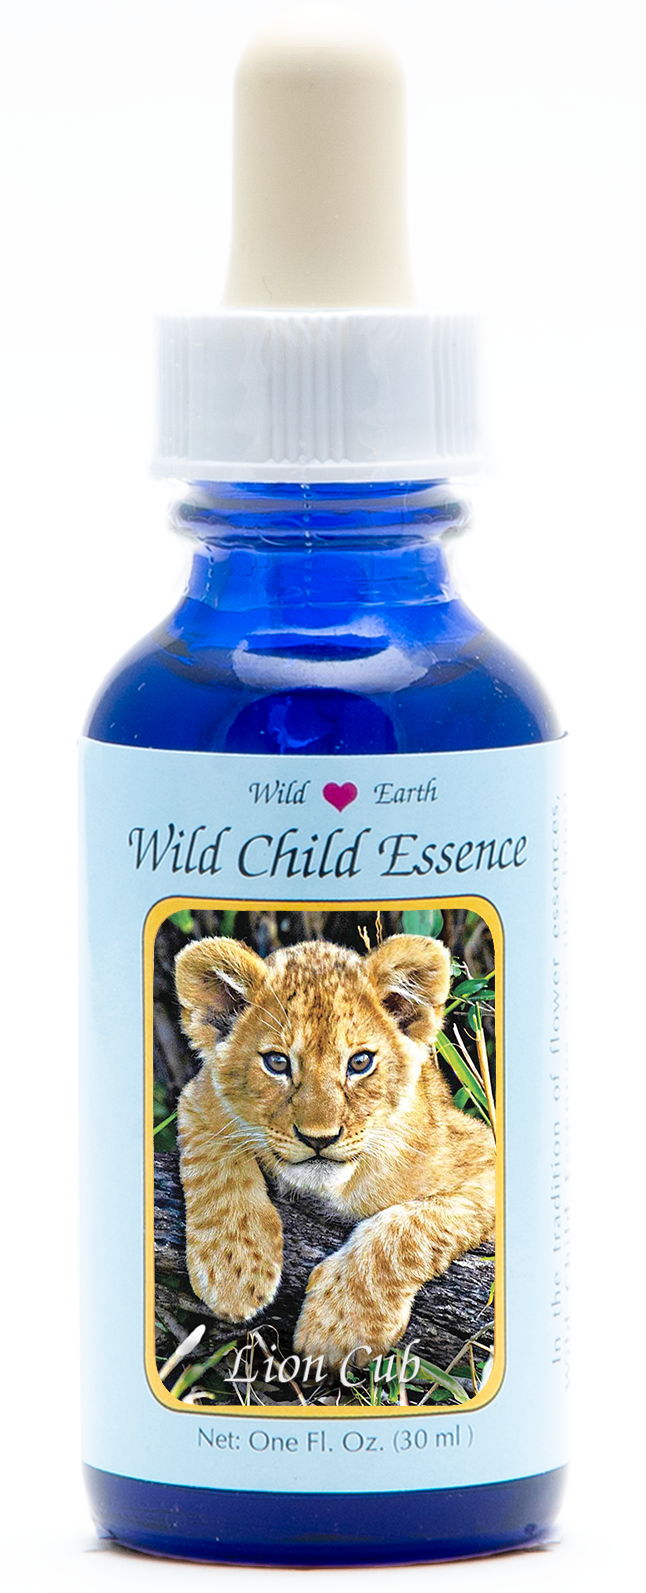 Lion cub animal essence 30ml